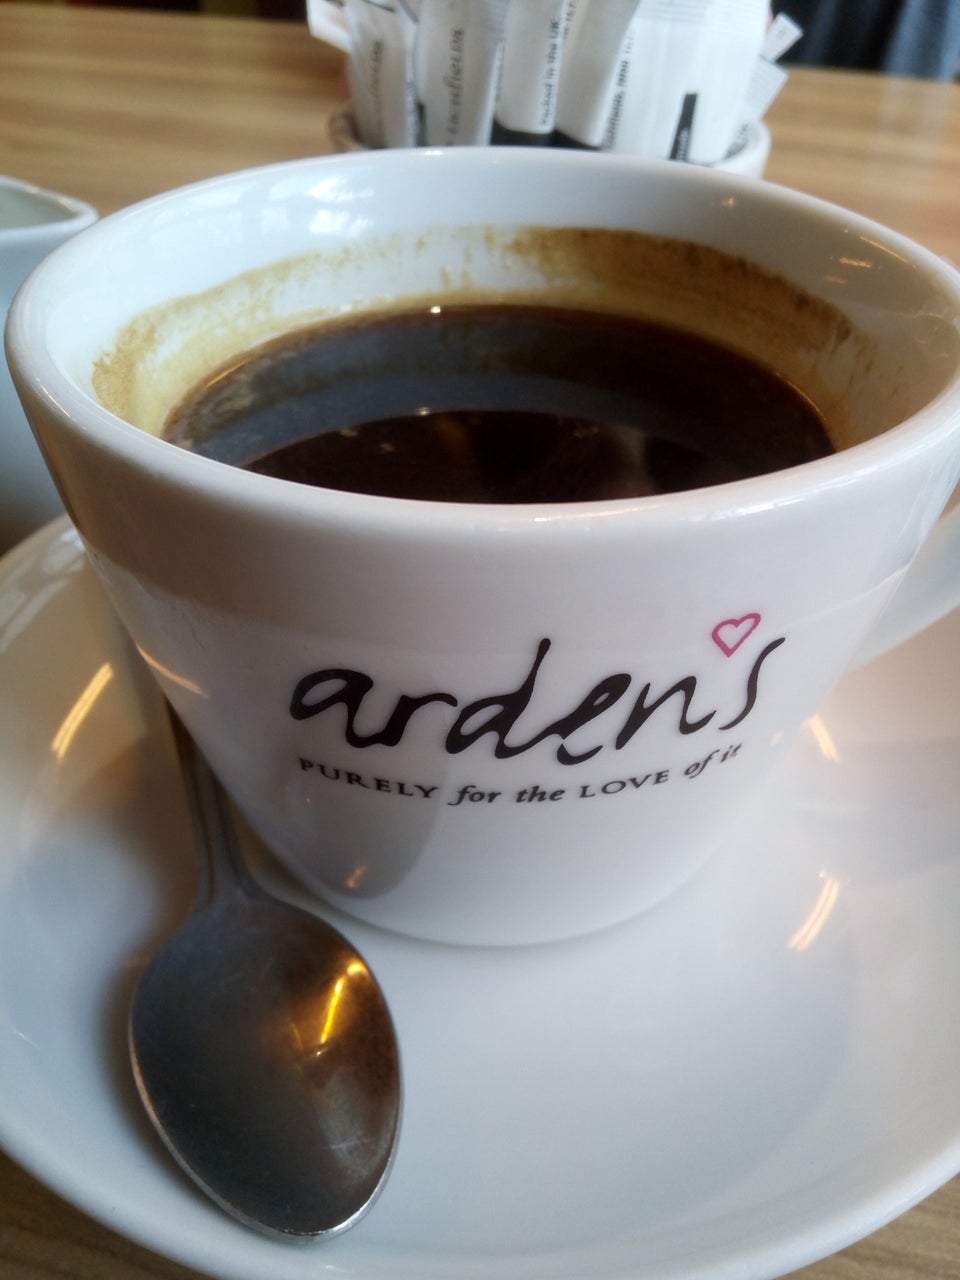 Arden's Coffee